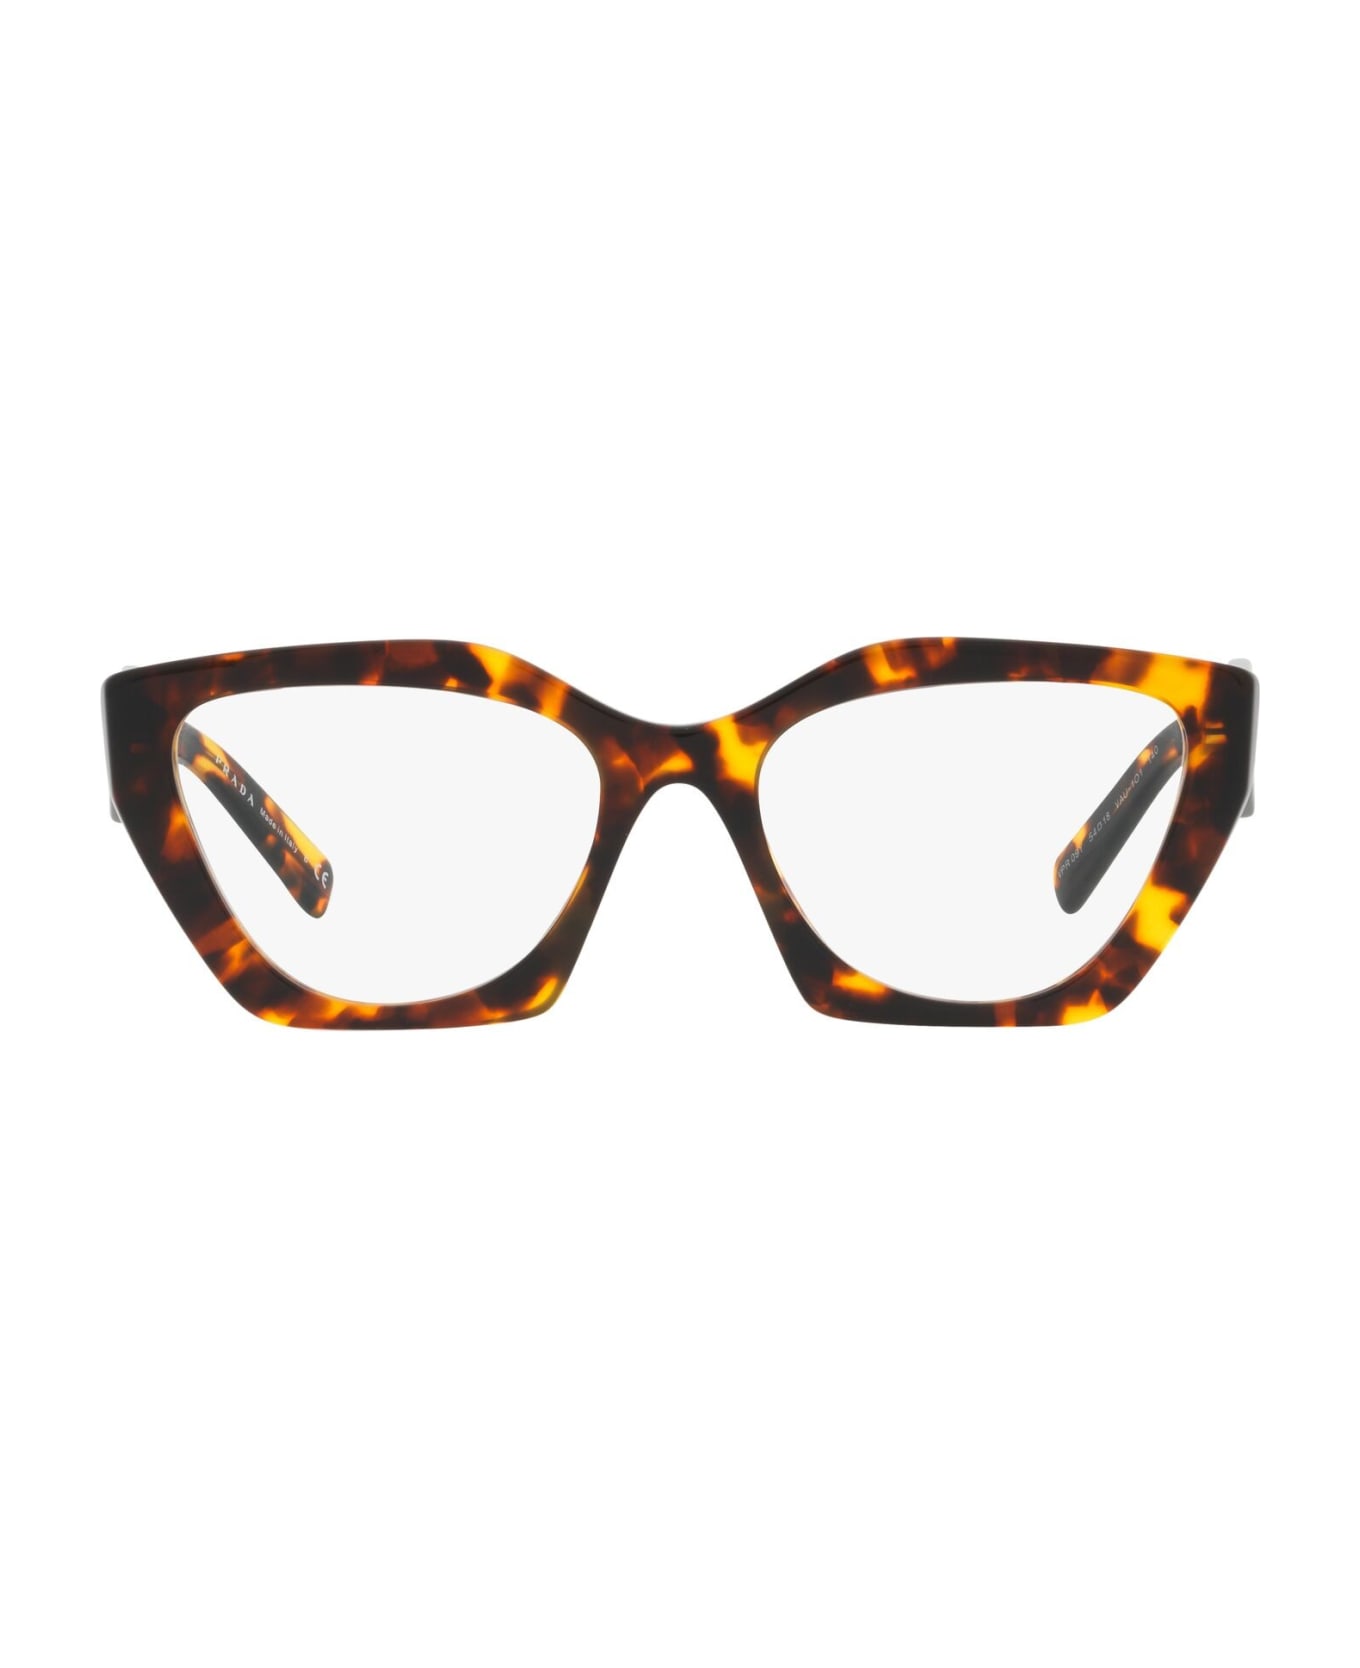 Prada Eyewear Glasses - Marrone